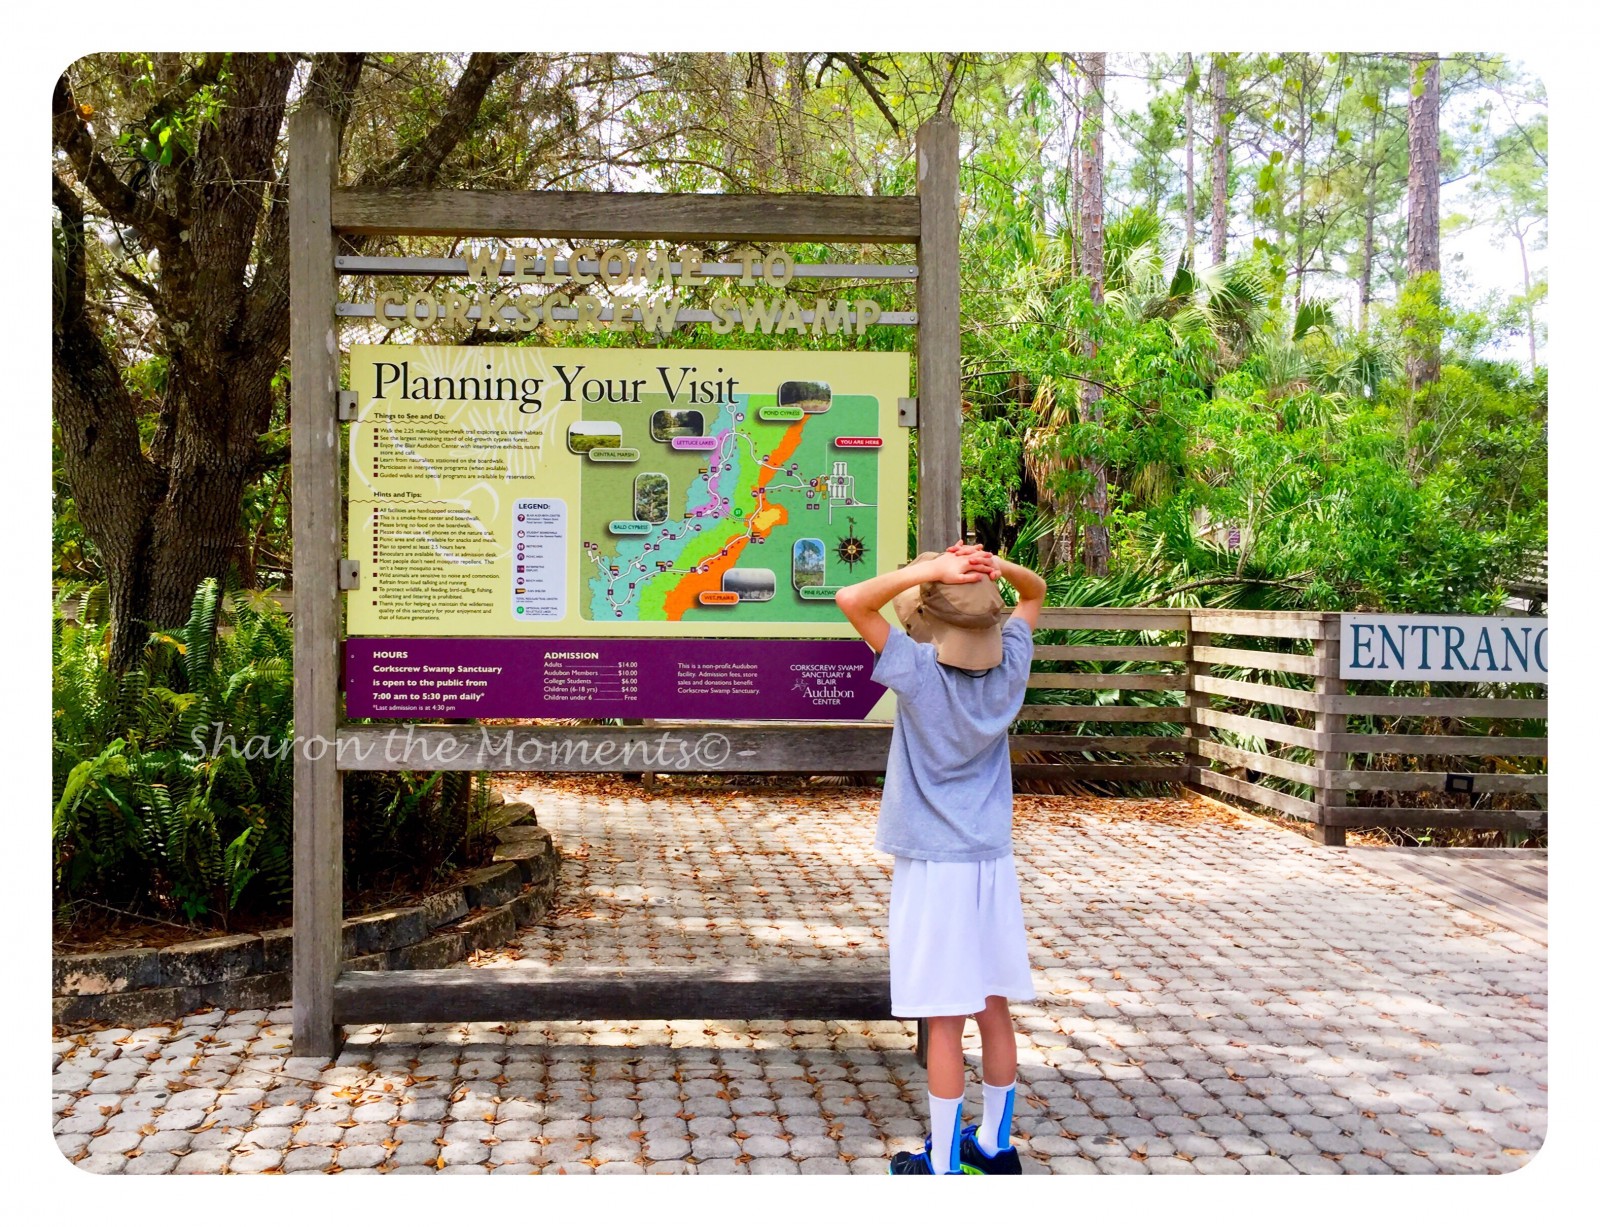 Corkscrew Swamp Sanctuary in SW Florida ||Sharon the Moments Blog